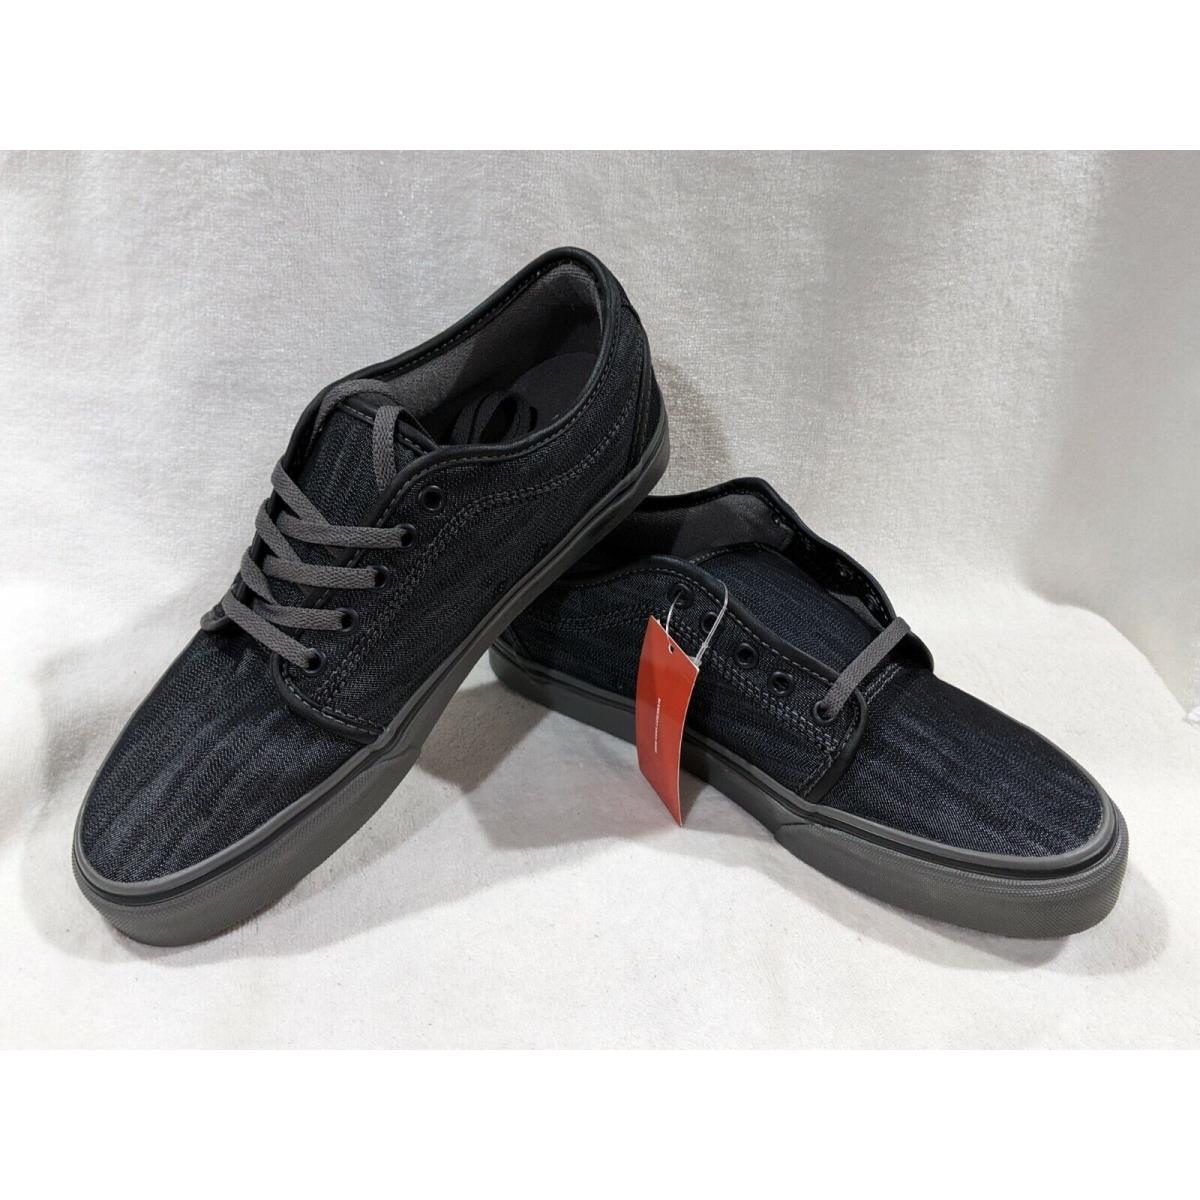 Vans Men`s Chukka Low Black/pewter Canvas Skate Shoes - Size 9/11.5